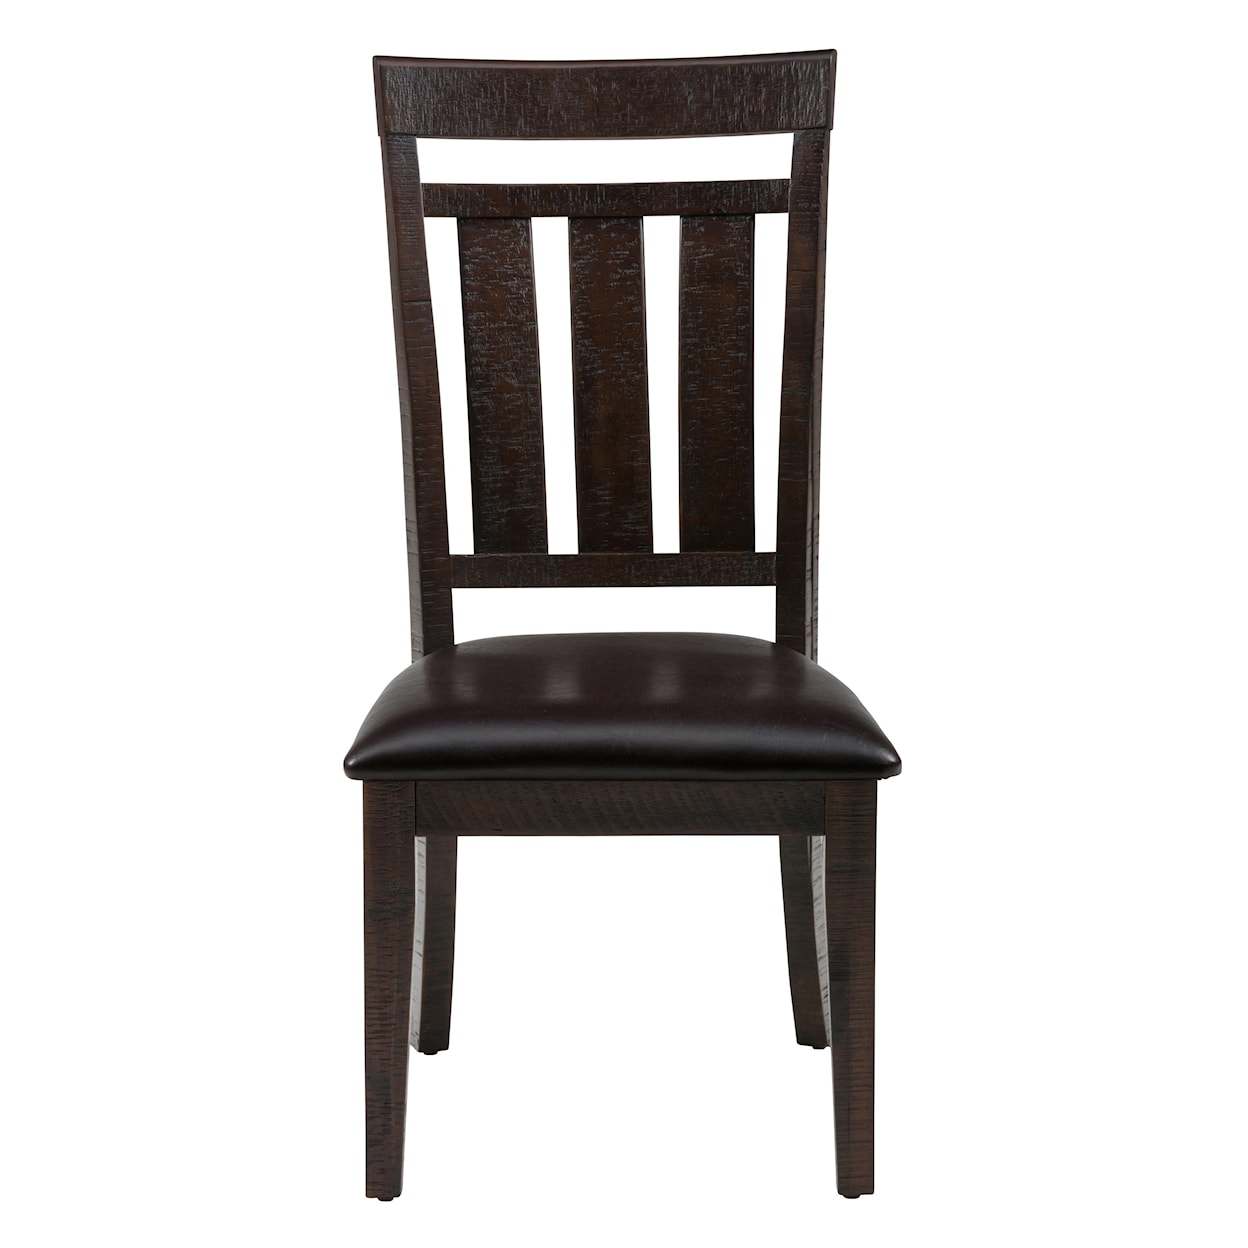 Belfort Essentials Kona Grove Upholstered Slat back Dining Chair